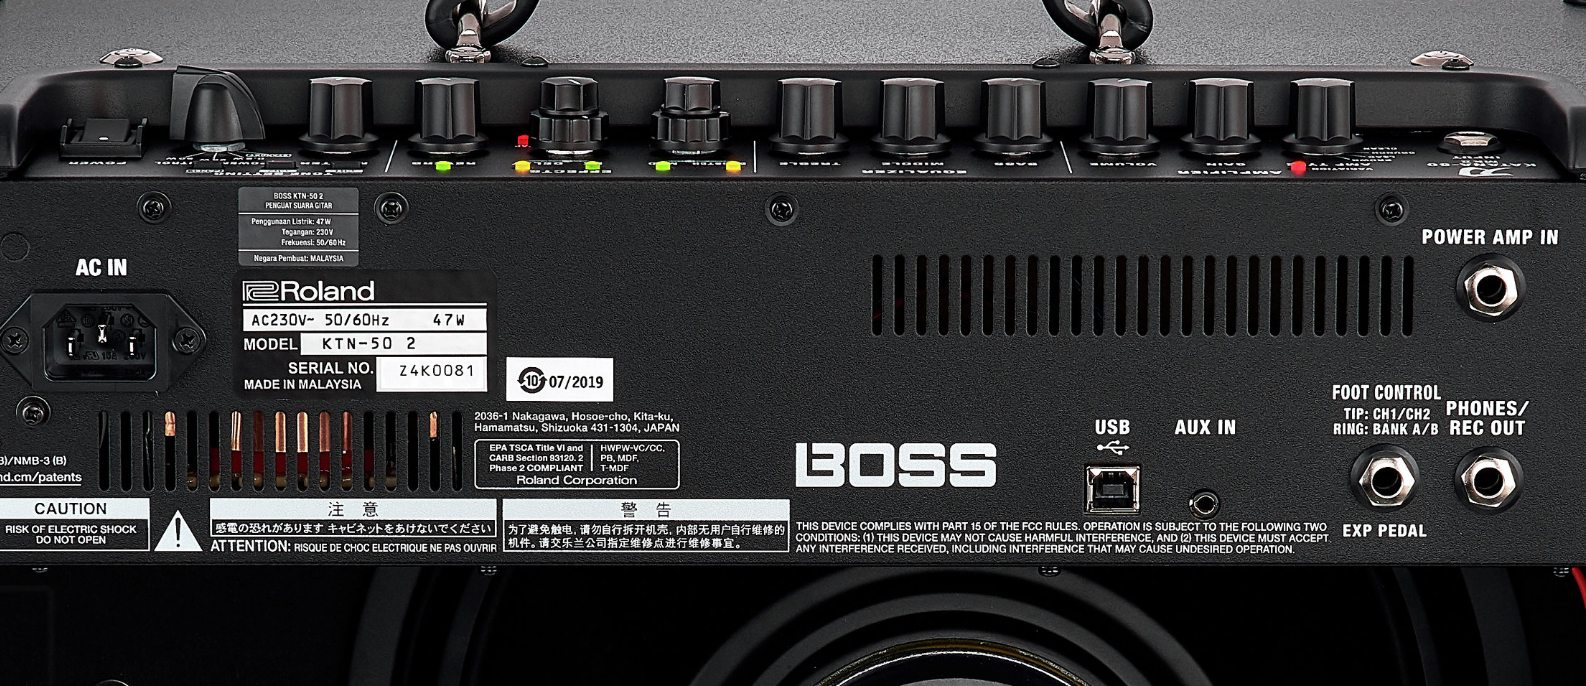 Boss Katana-50 Mkii 0.5/25/50w 1x12 - Electric guitar combo amp - Variation 4